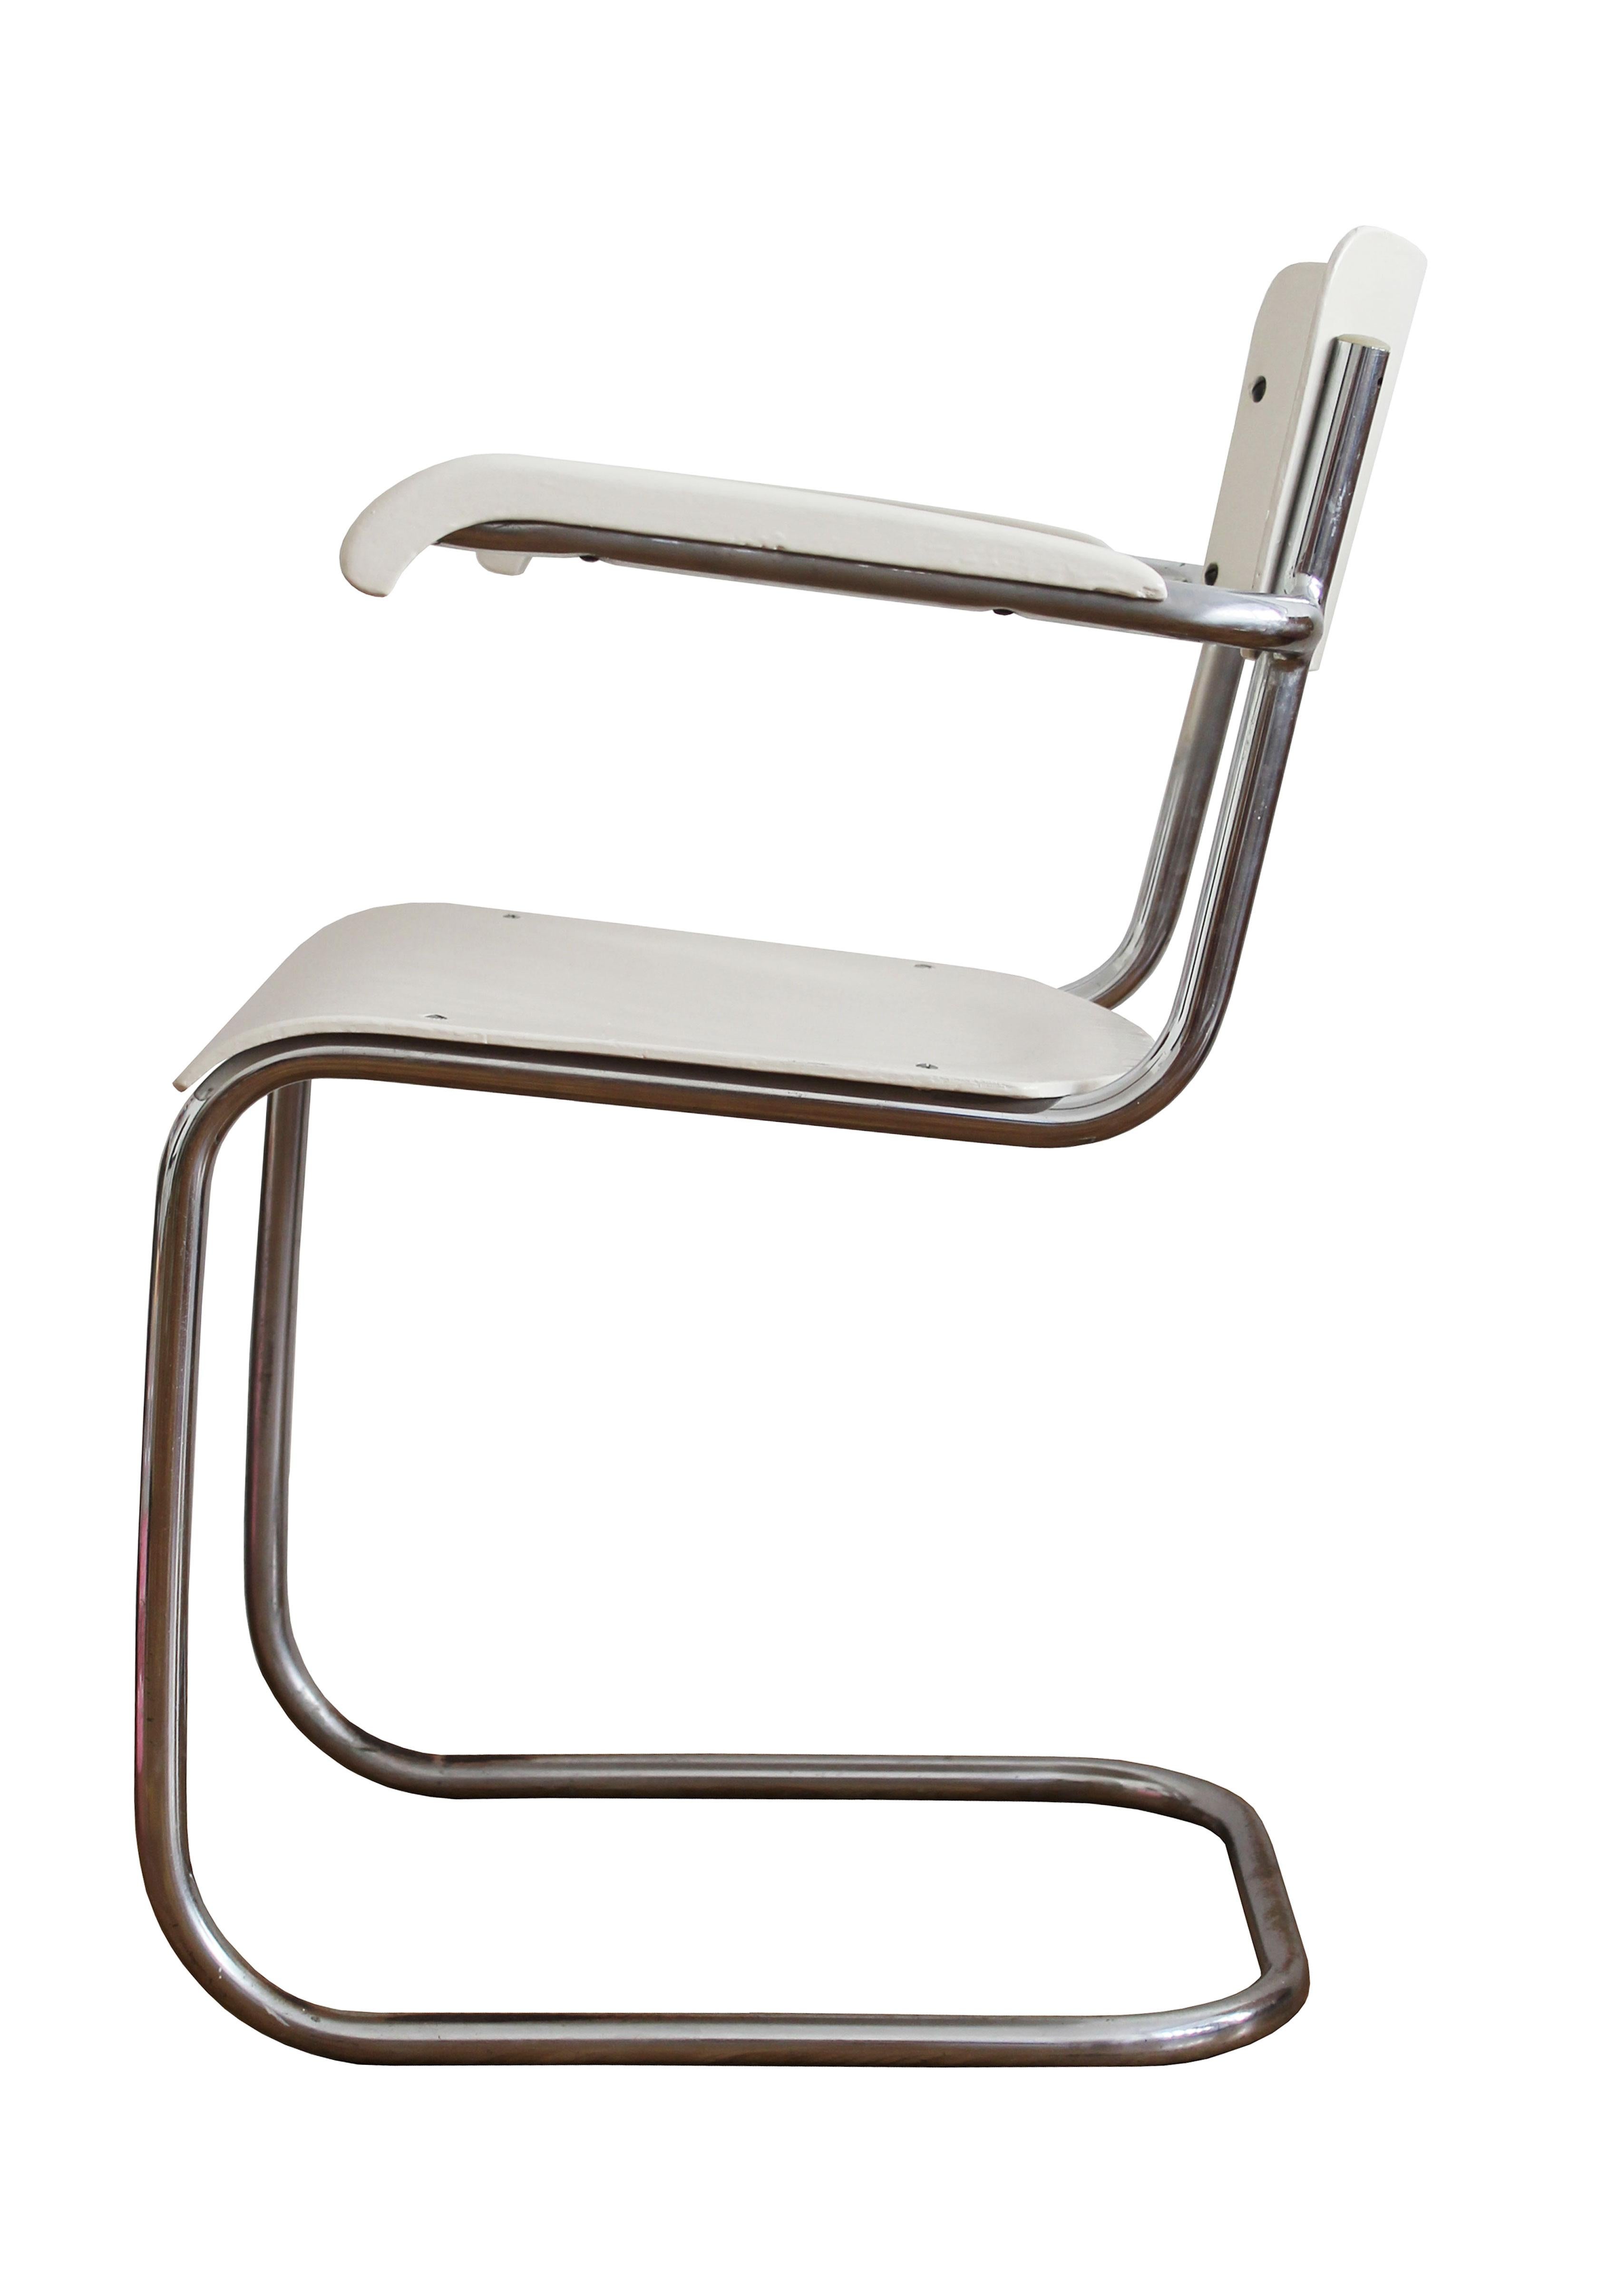 Painted 1930's Modernist Tubular Chair